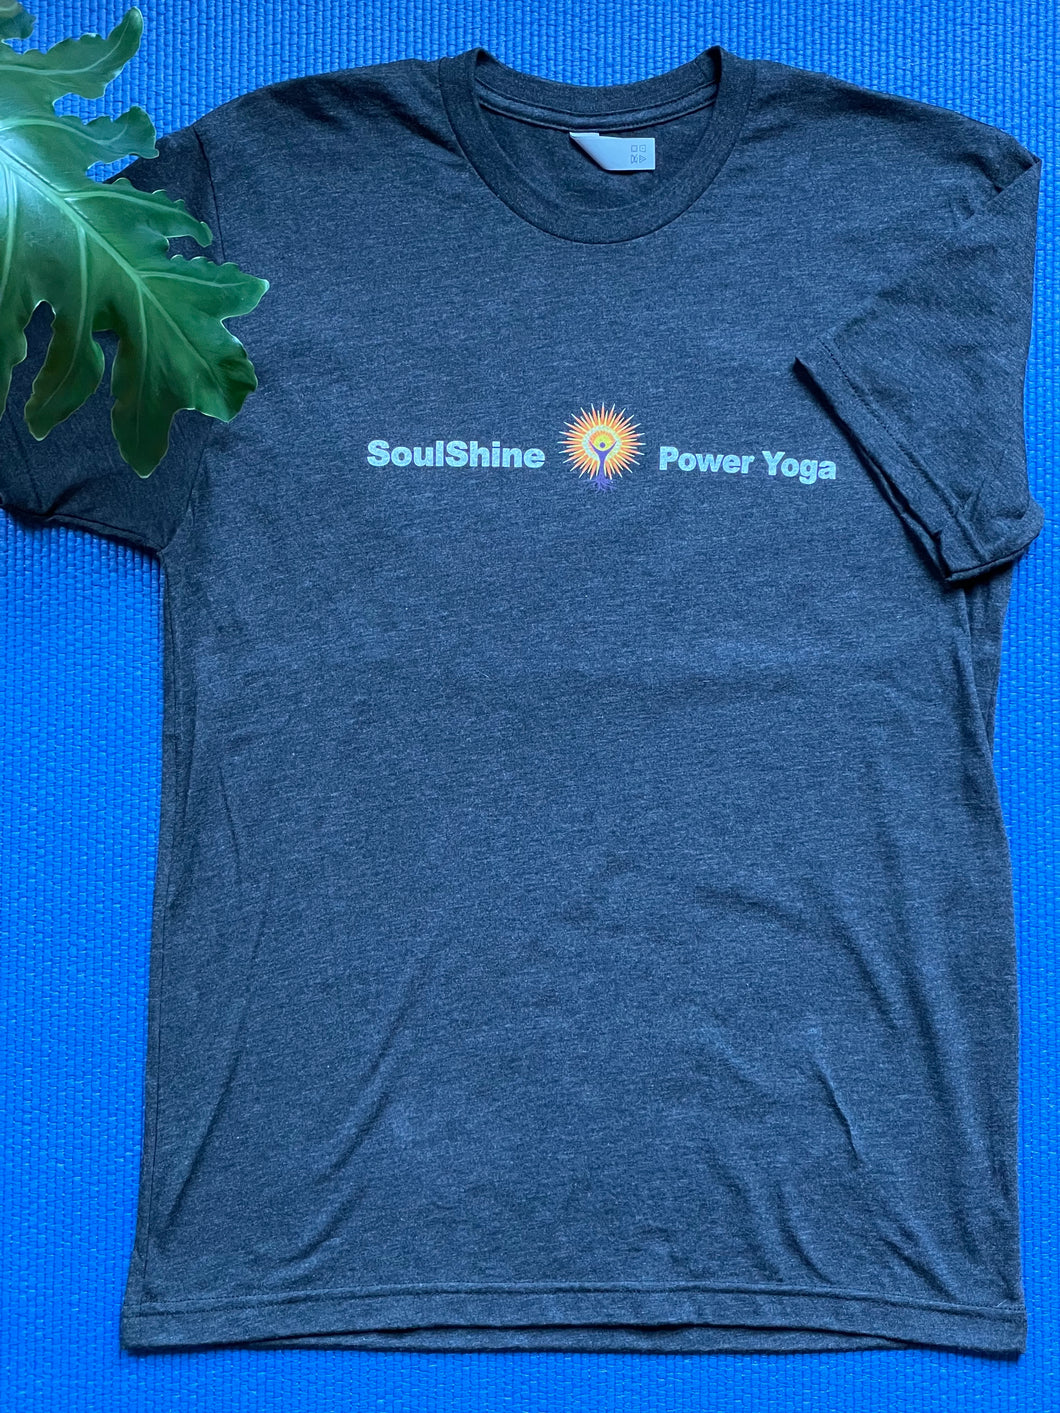 Original SoulShine Power Yoga T-Shirt